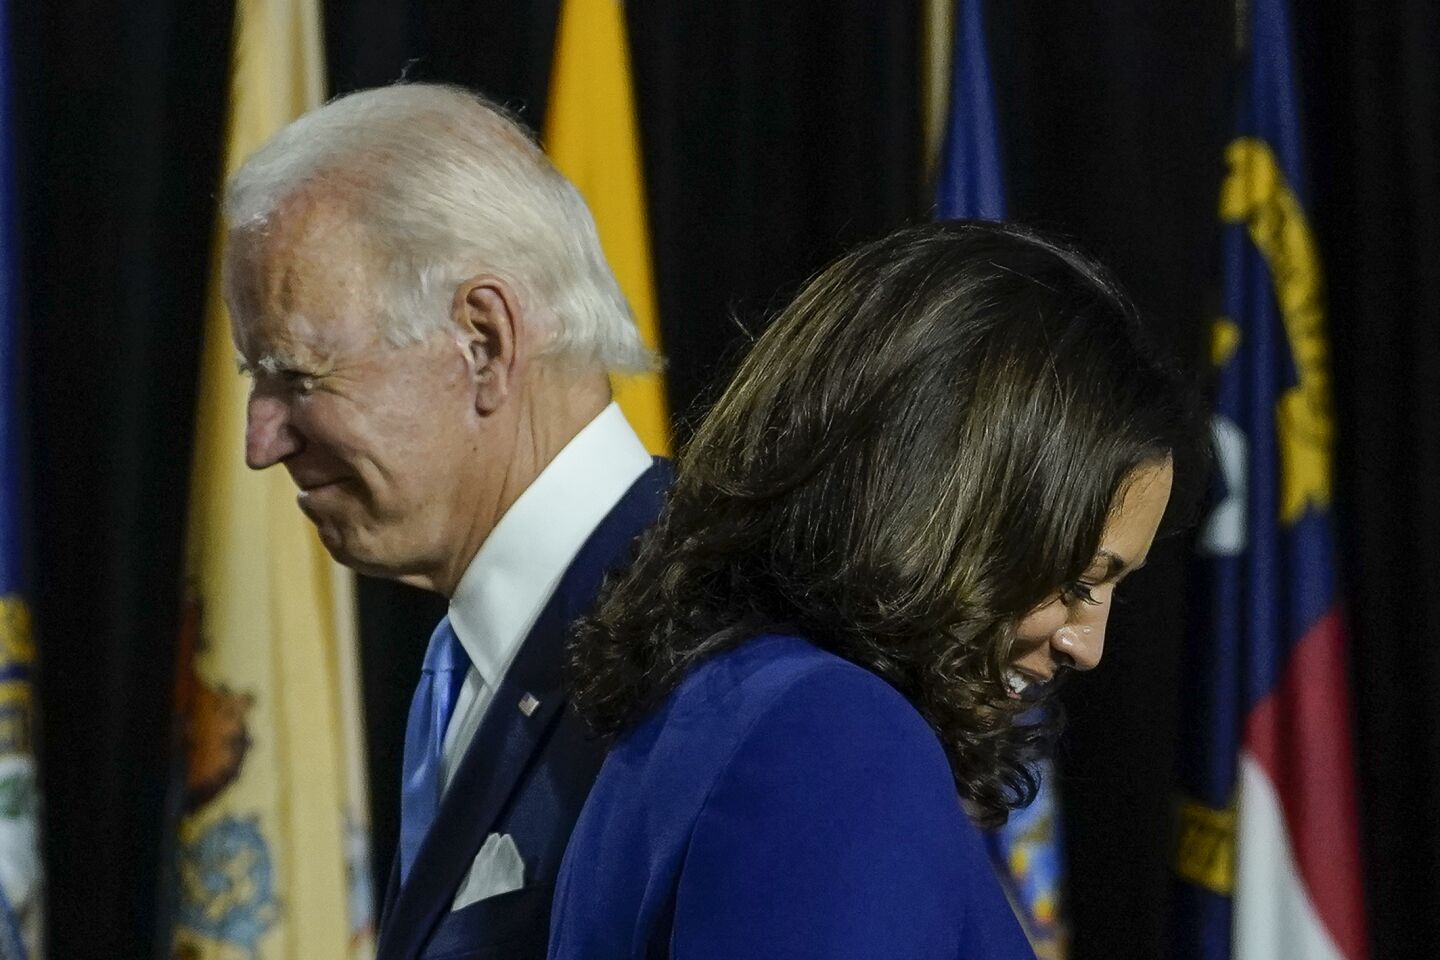 Joe Biden and Running Mate Kamala Harris Deliver Remarks In Delaware